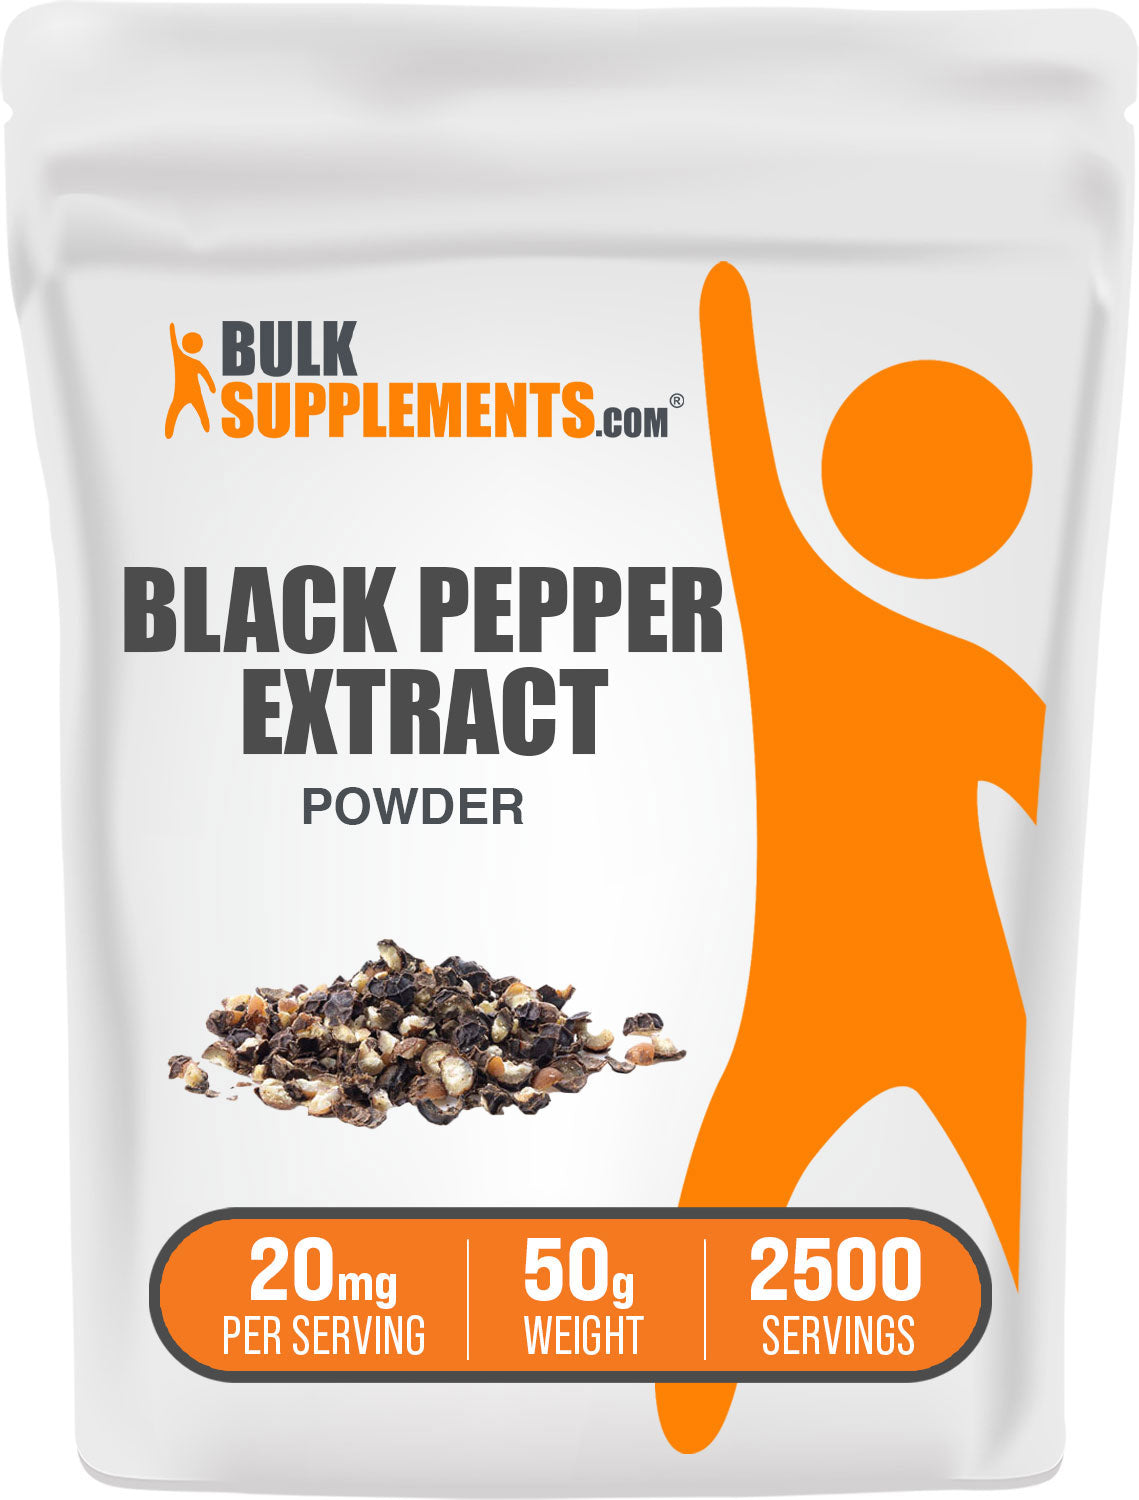 Black pepper extract for immune system